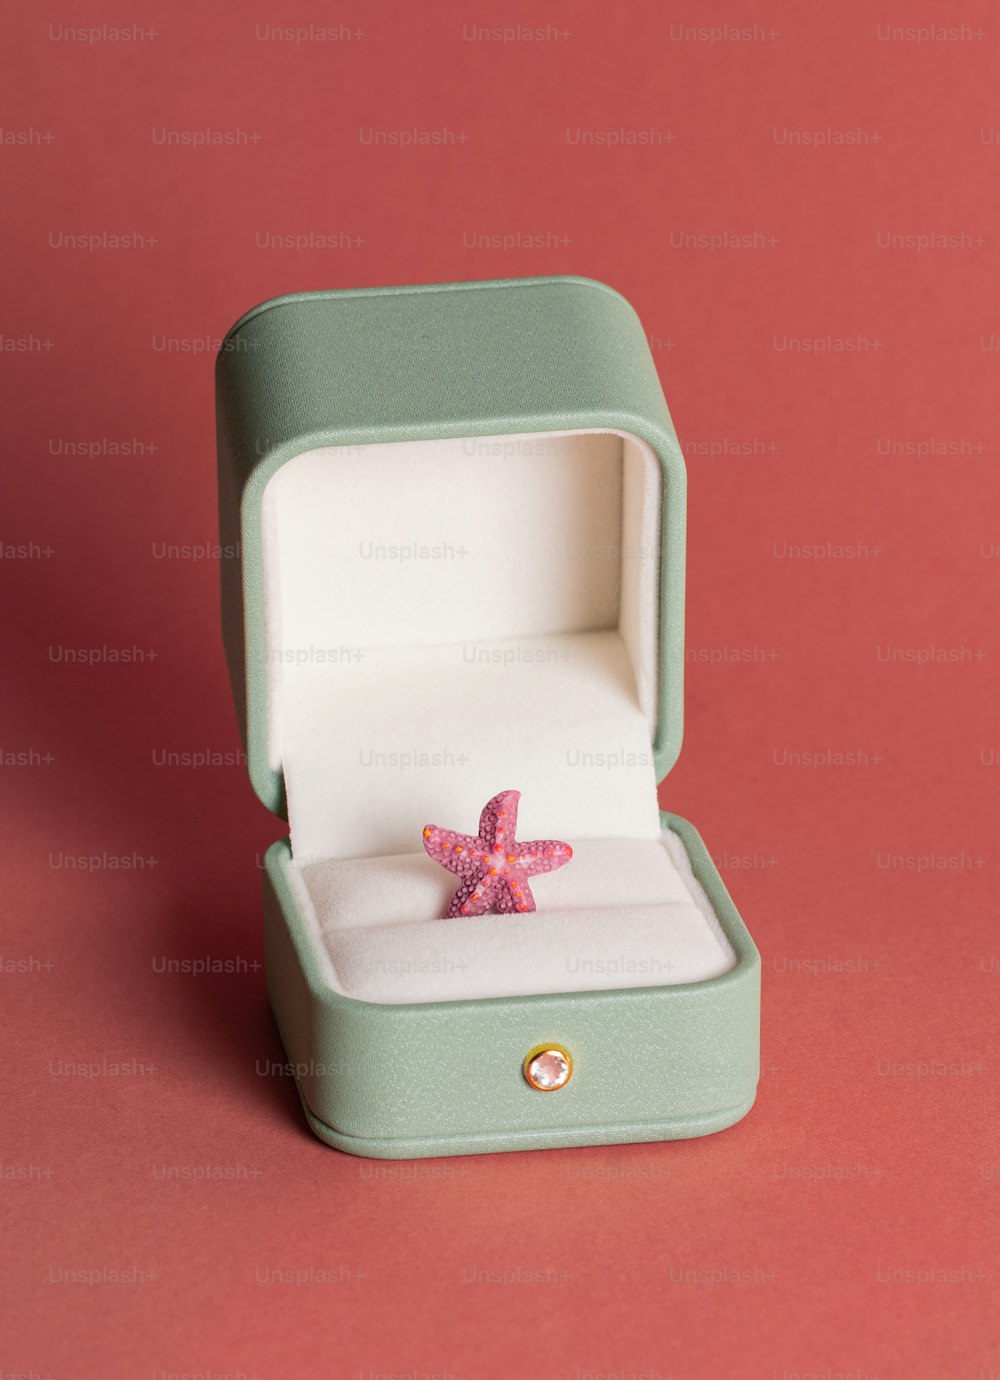 Un anillo de estrella de mar en una caja sobre un fondo rosa